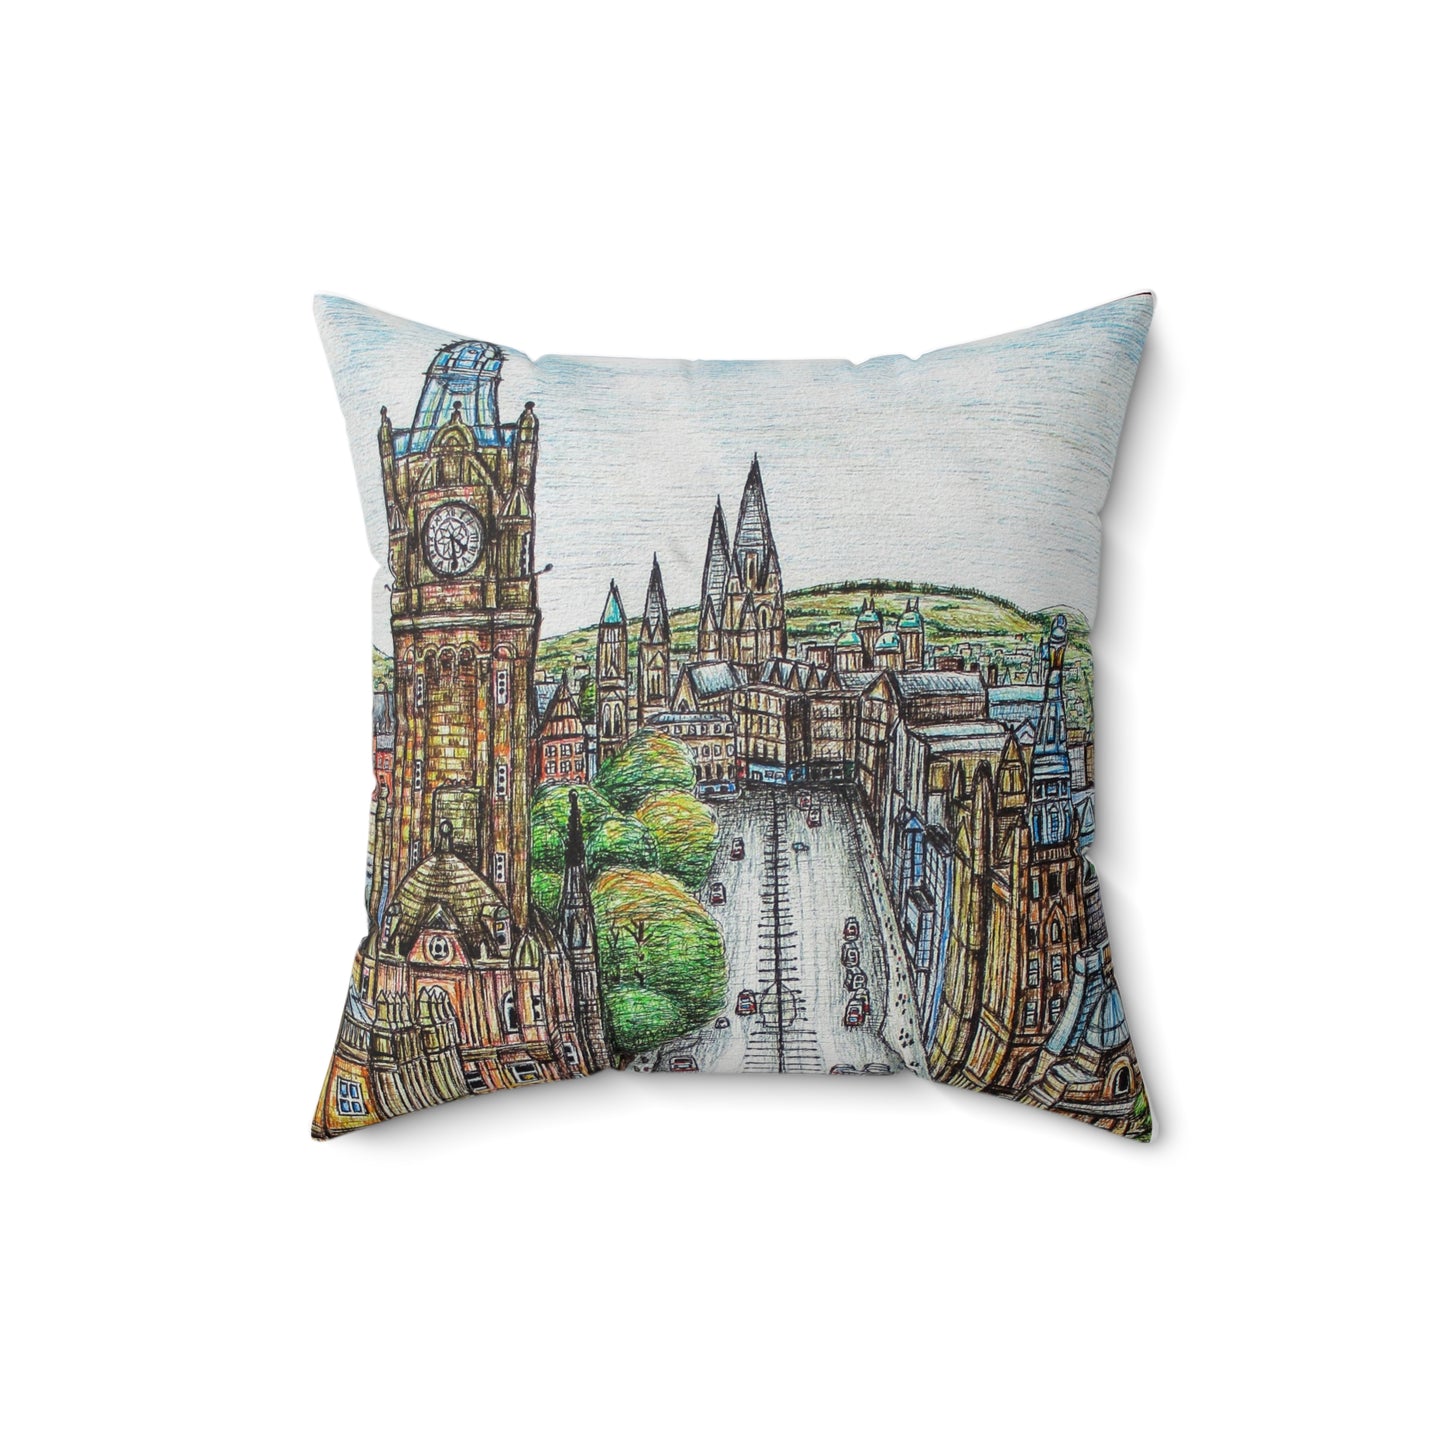 Indoor decorative cushion- Edinburgh Princes Street